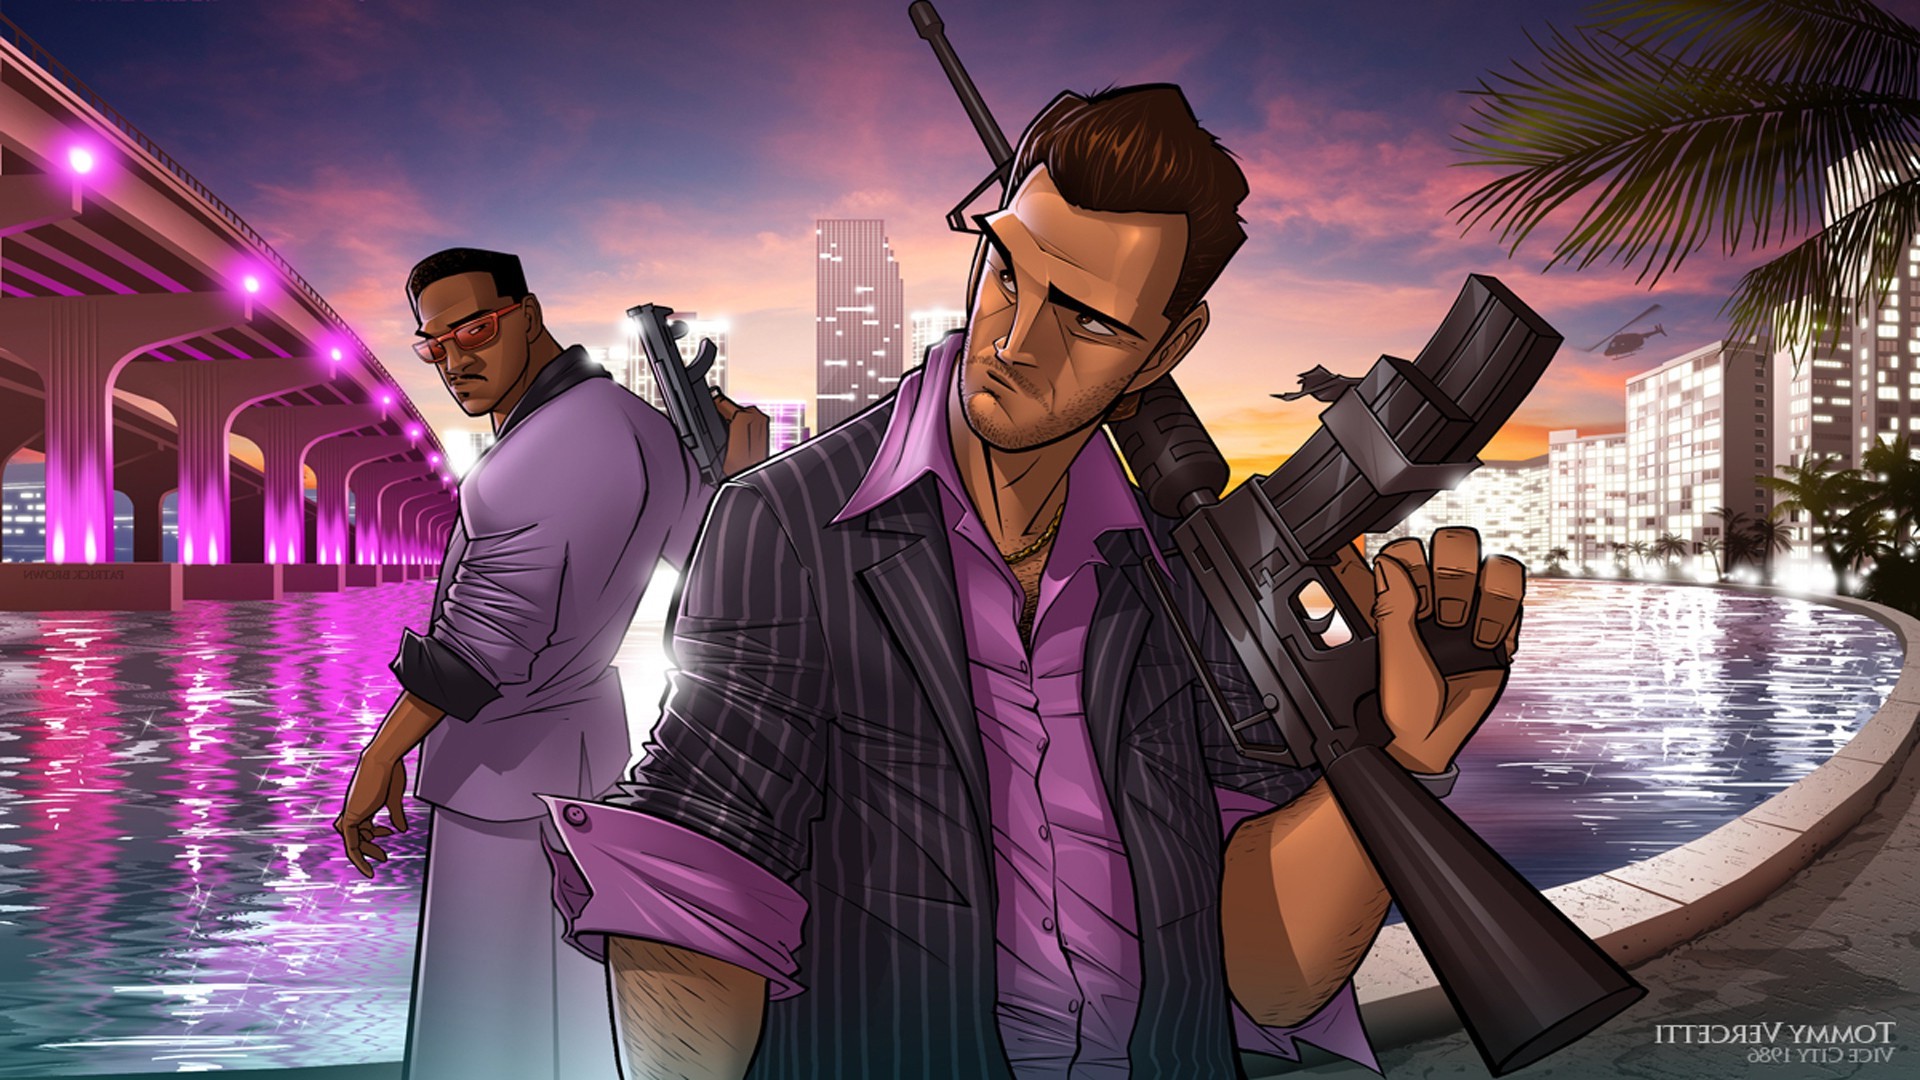 Grand Theft Auto Vice City HD Wallpaper X